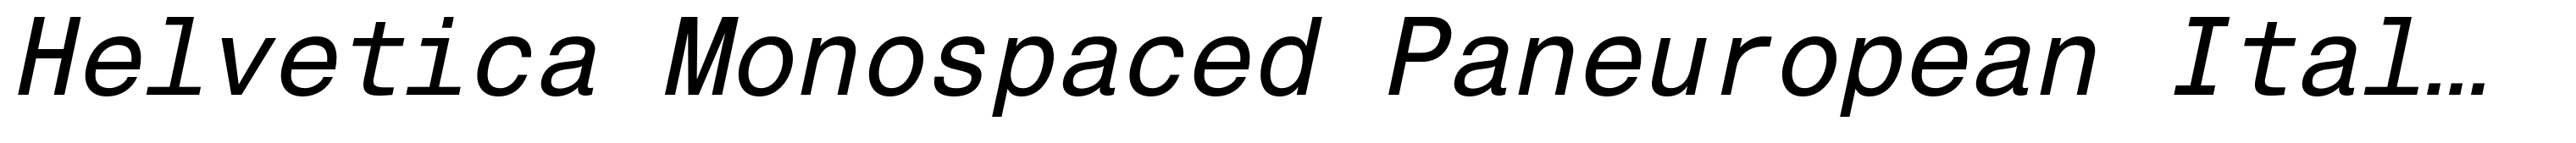 Helvetica Monospaced Paneuropean Italic